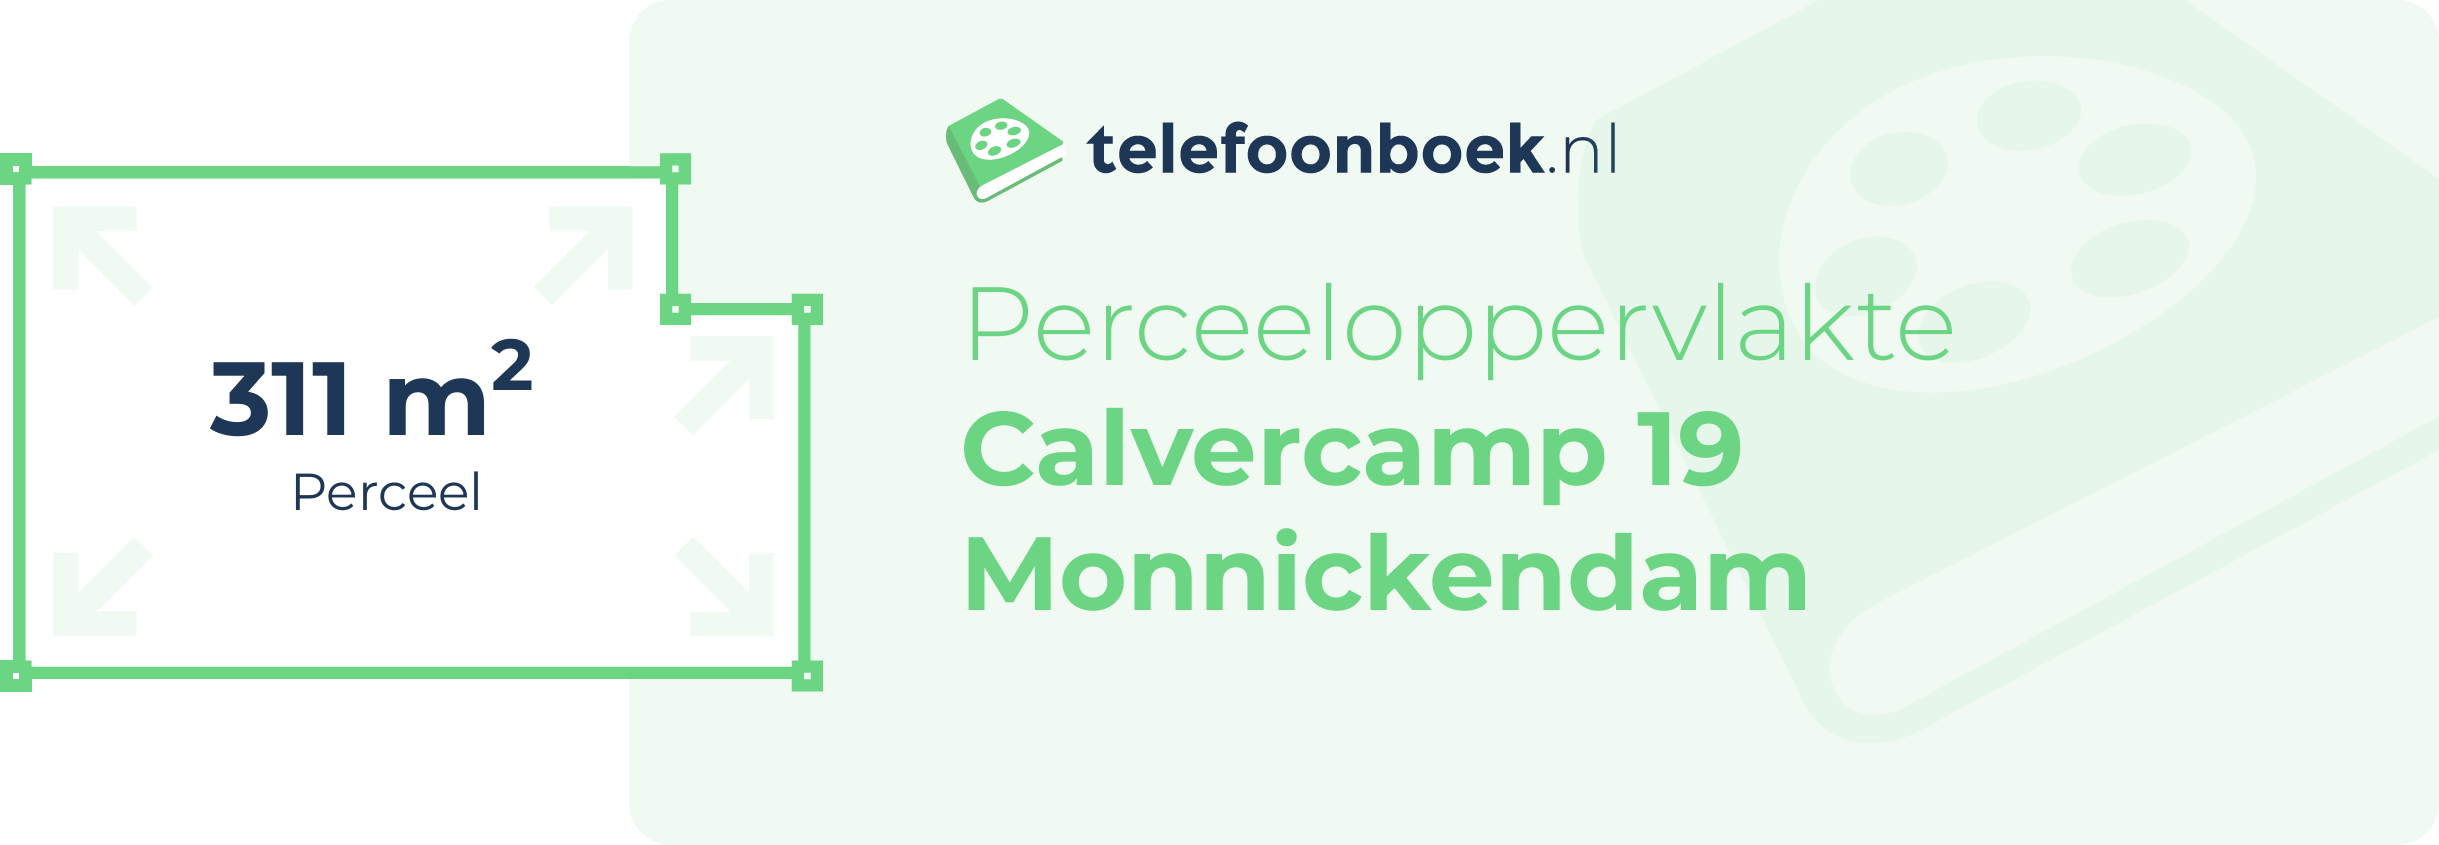 Perceeloppervlakte Calvercamp 19 Monnickendam